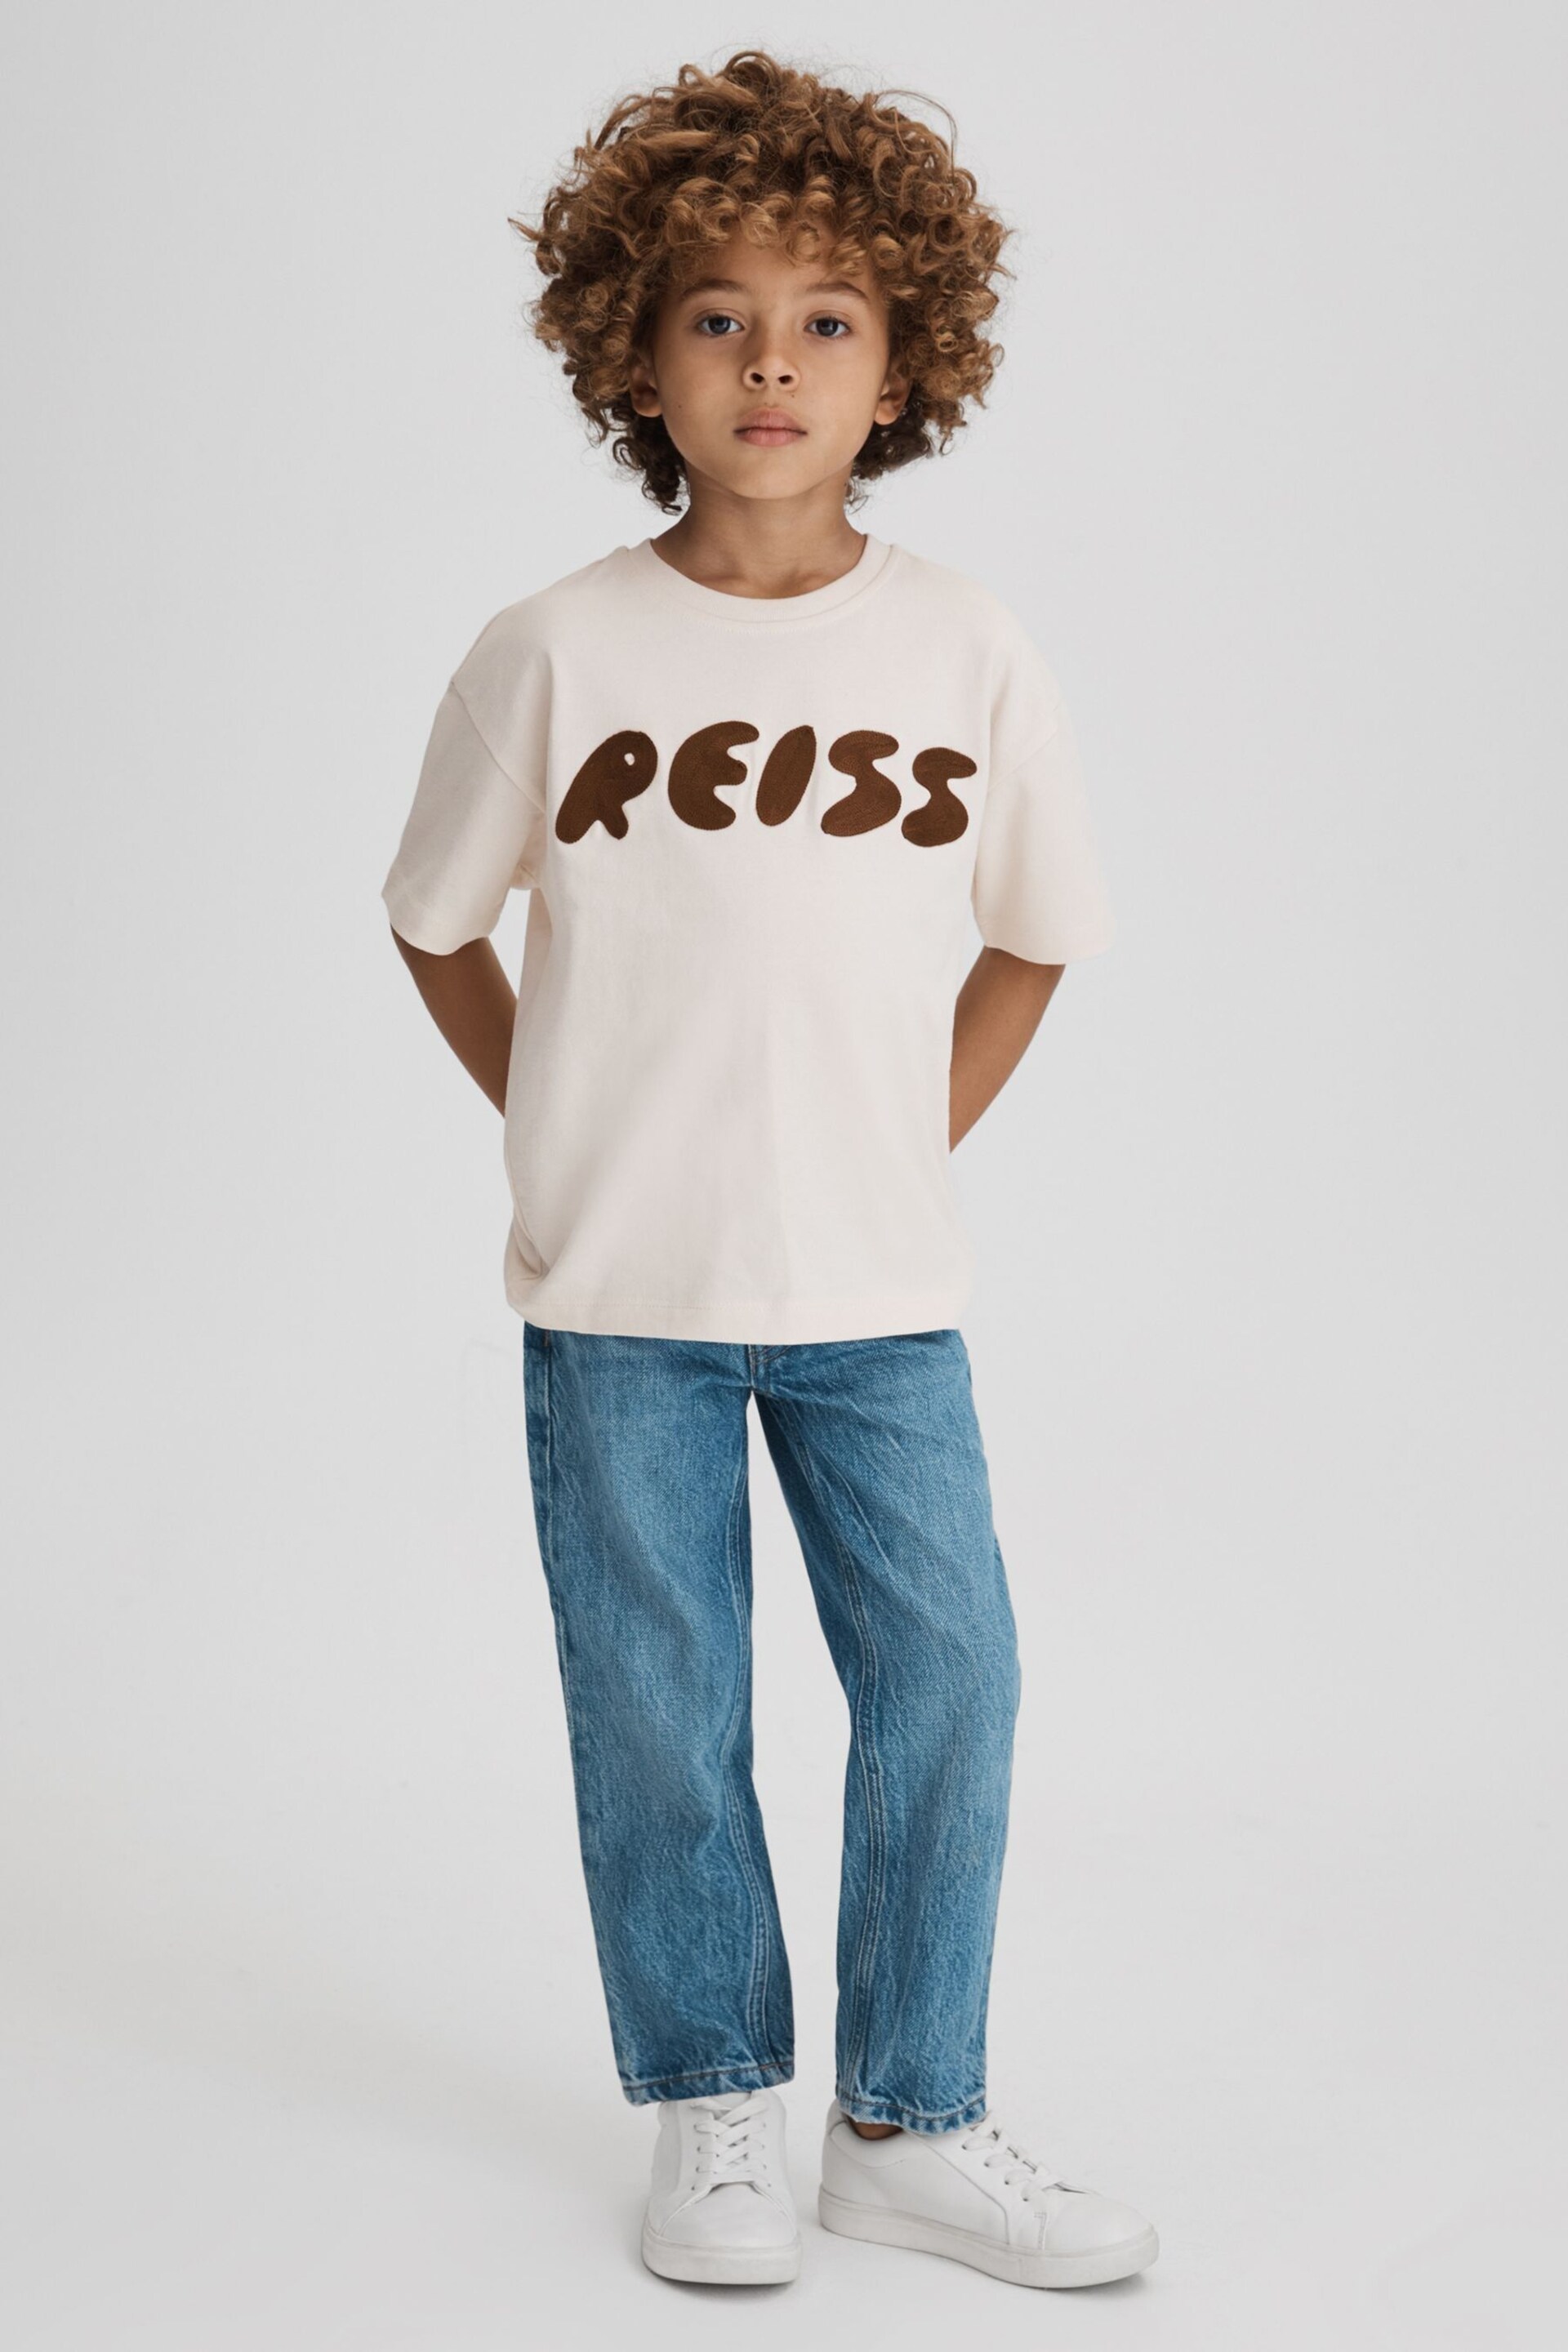 Reiss Ecru Sands Senior Cotton Crew Neck Motif T-Shirt - Image 1 of 6